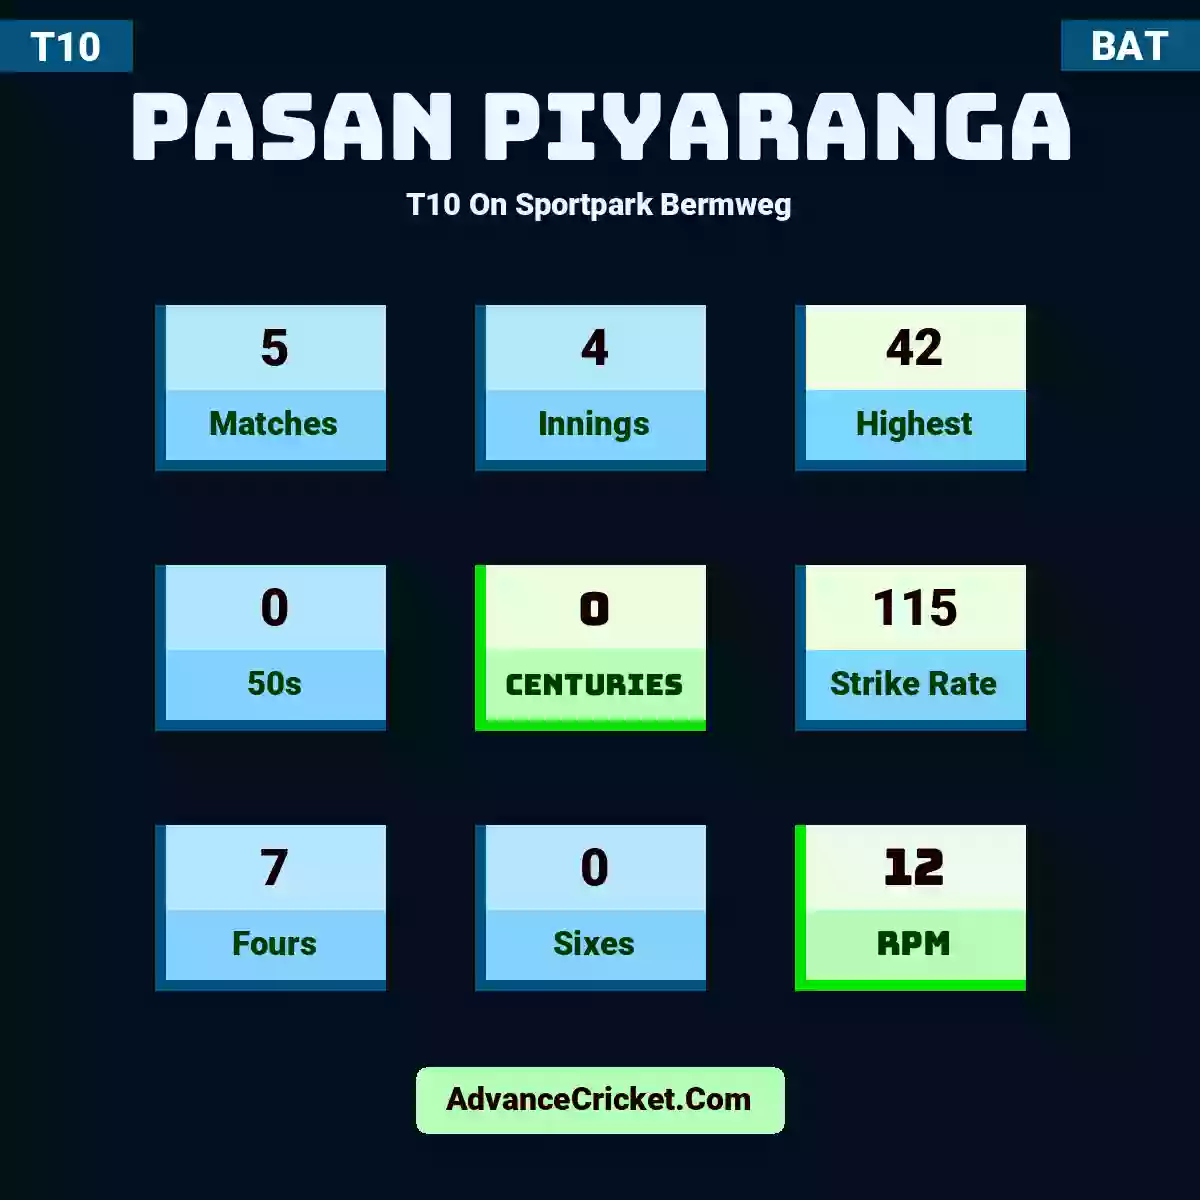 Pasan Piyaranga T10  On Sportpark Bermweg, Pasan Piyaranga played 5 matches, scored 42 runs as highest, 0 half-centuries, and 0 centuries, with a strike rate of 115. P.Piyaranga hit 7 fours and 0 sixes, with an RPM of 12.